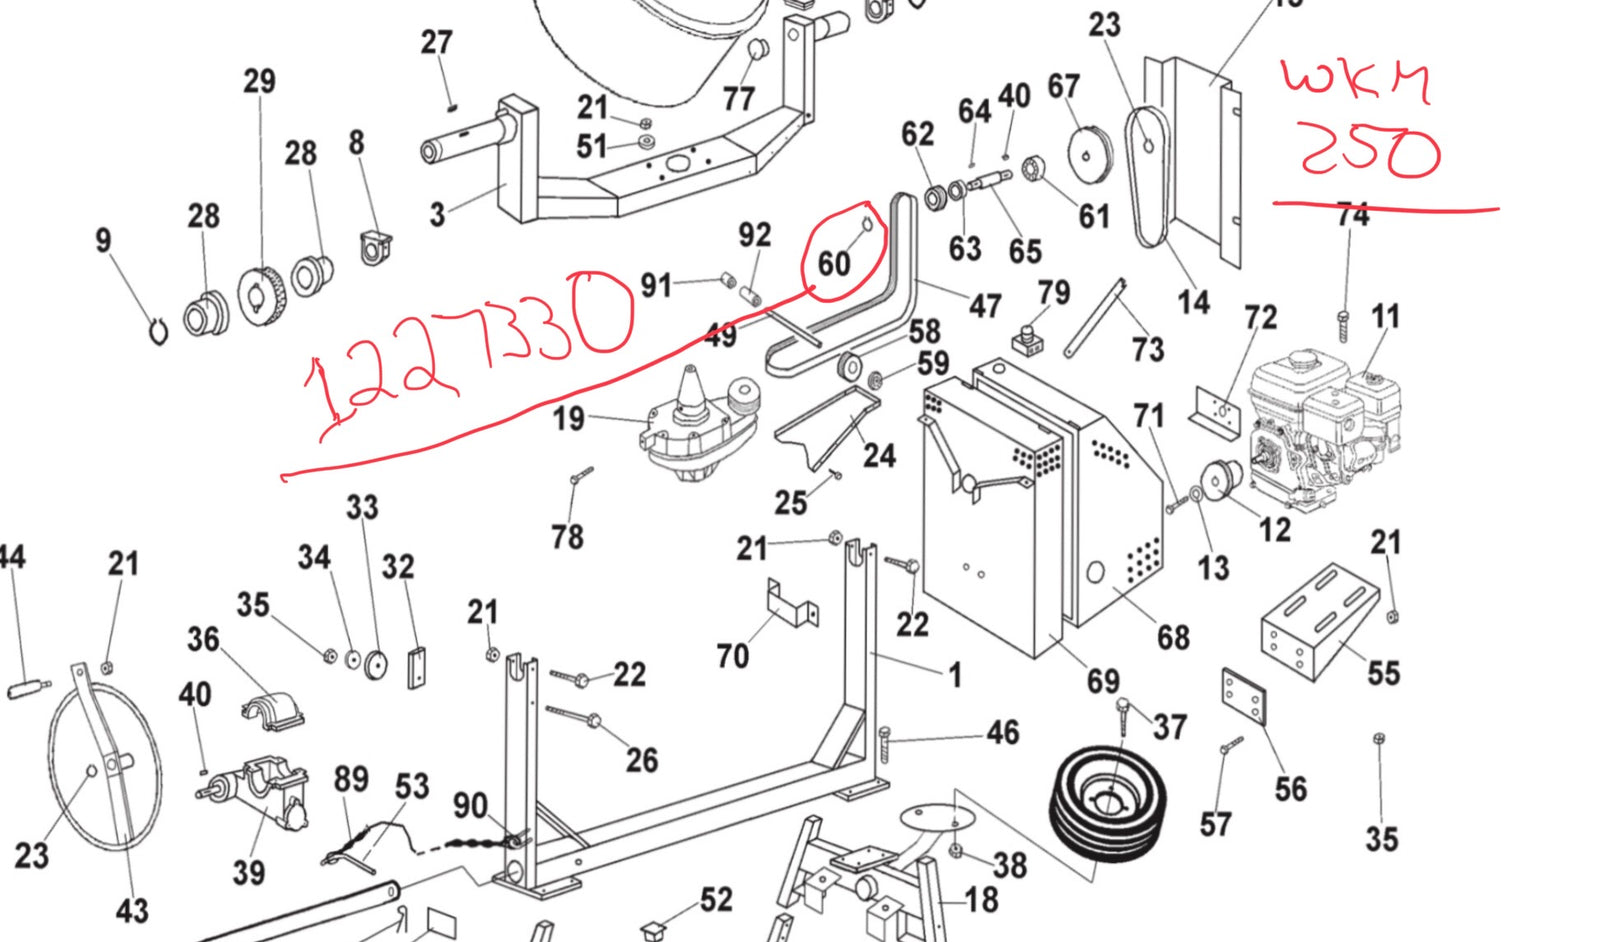 PN 1227330 - Stop Ring - IMER Workman II 250 Mixer. ( Fits Workman 350 and Workman 420 Mixers )